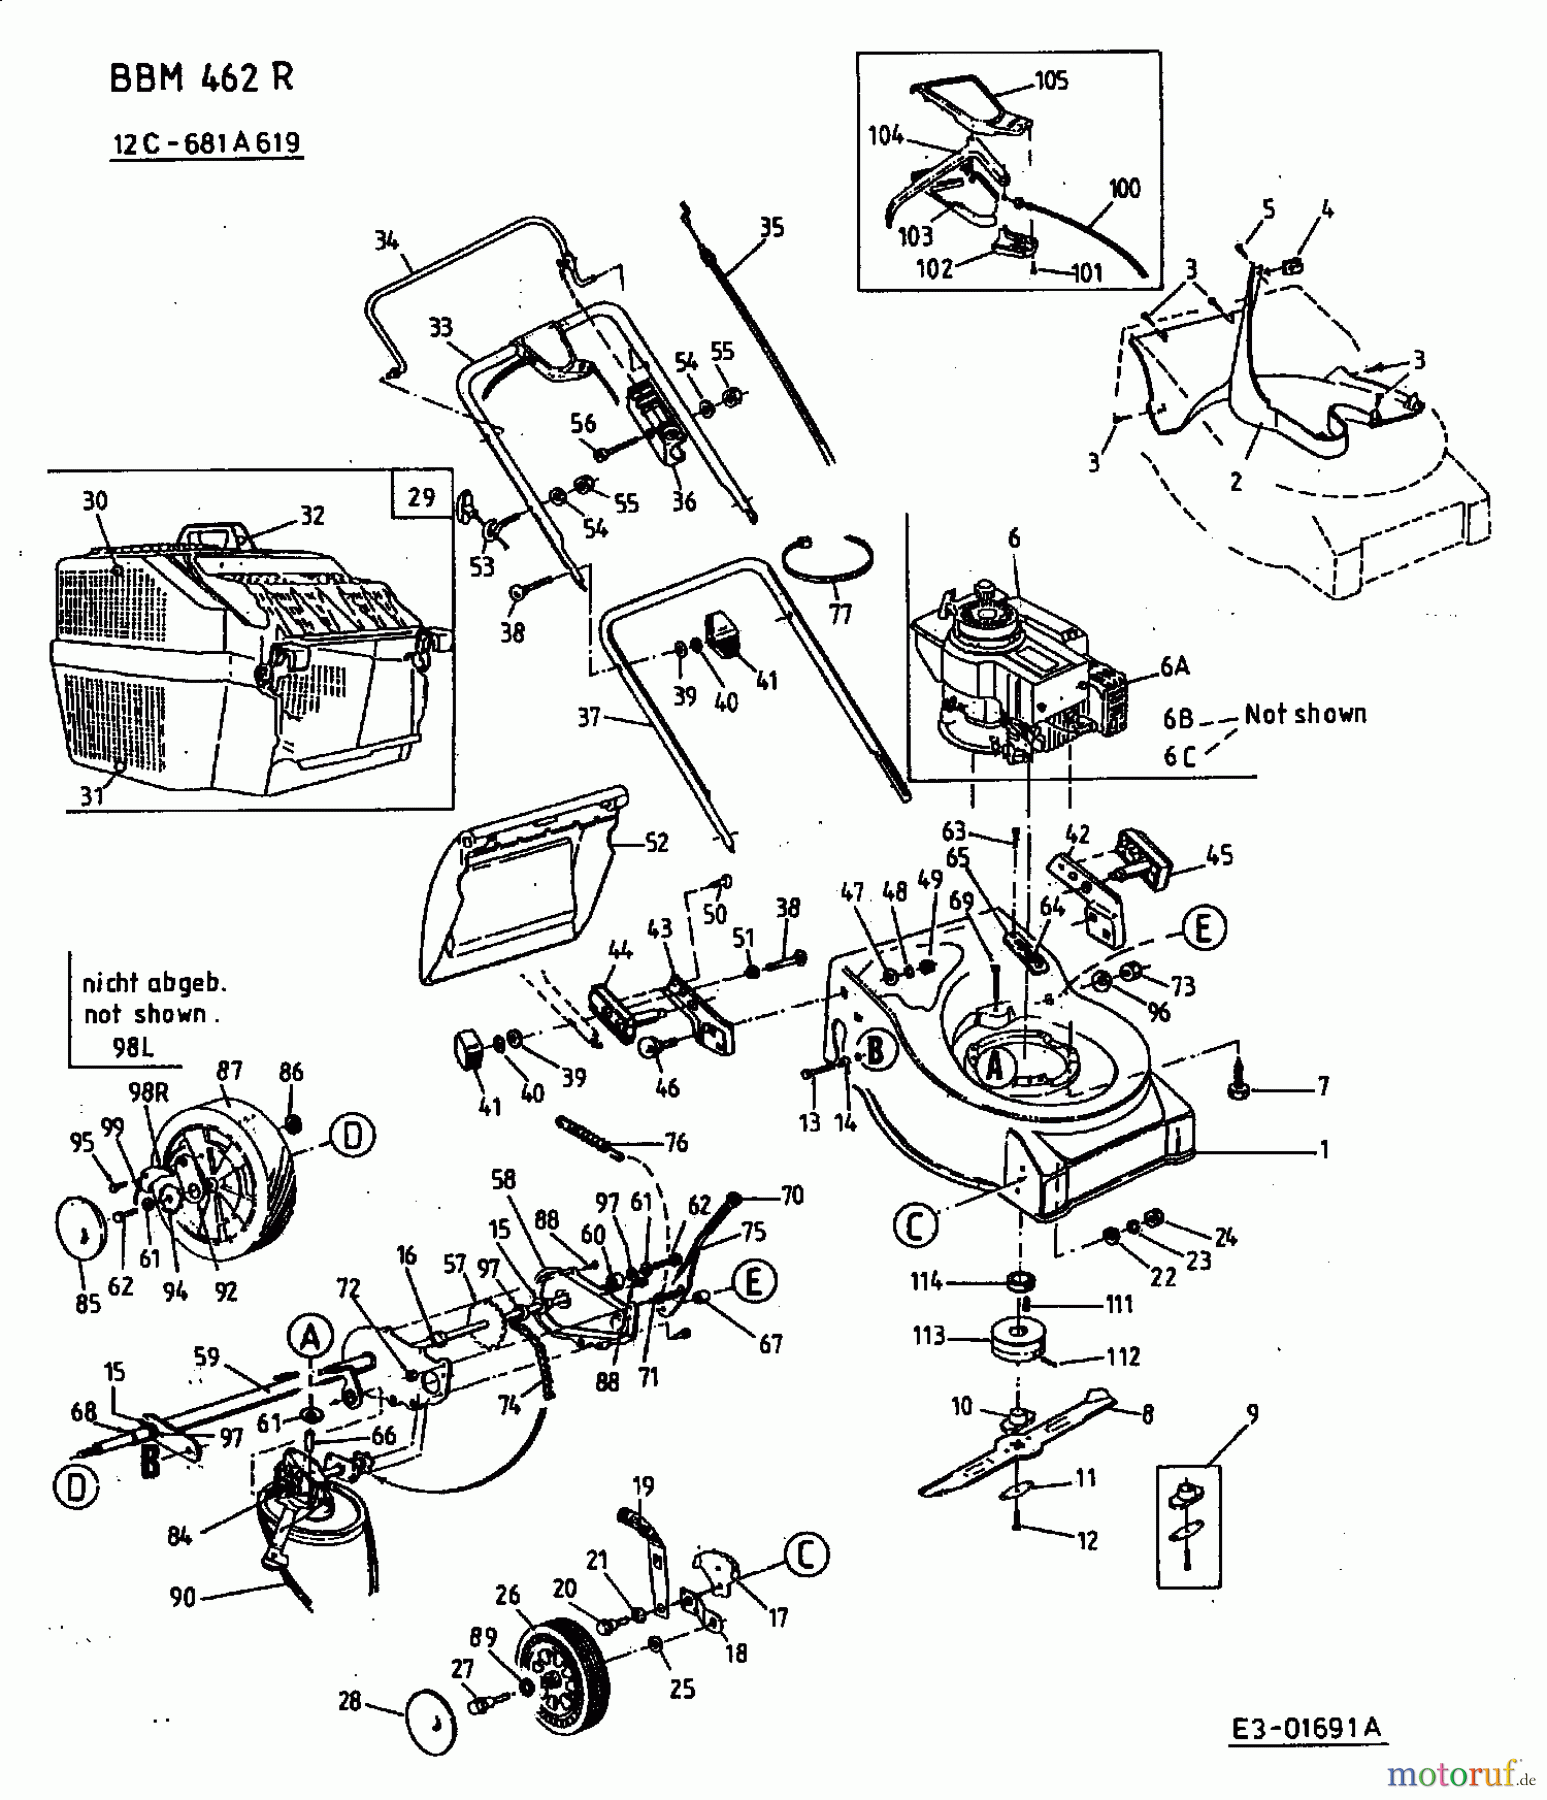  Budget Petrol mower self propelled BBM 462 R 12C-681A619  (2002) Basic machine